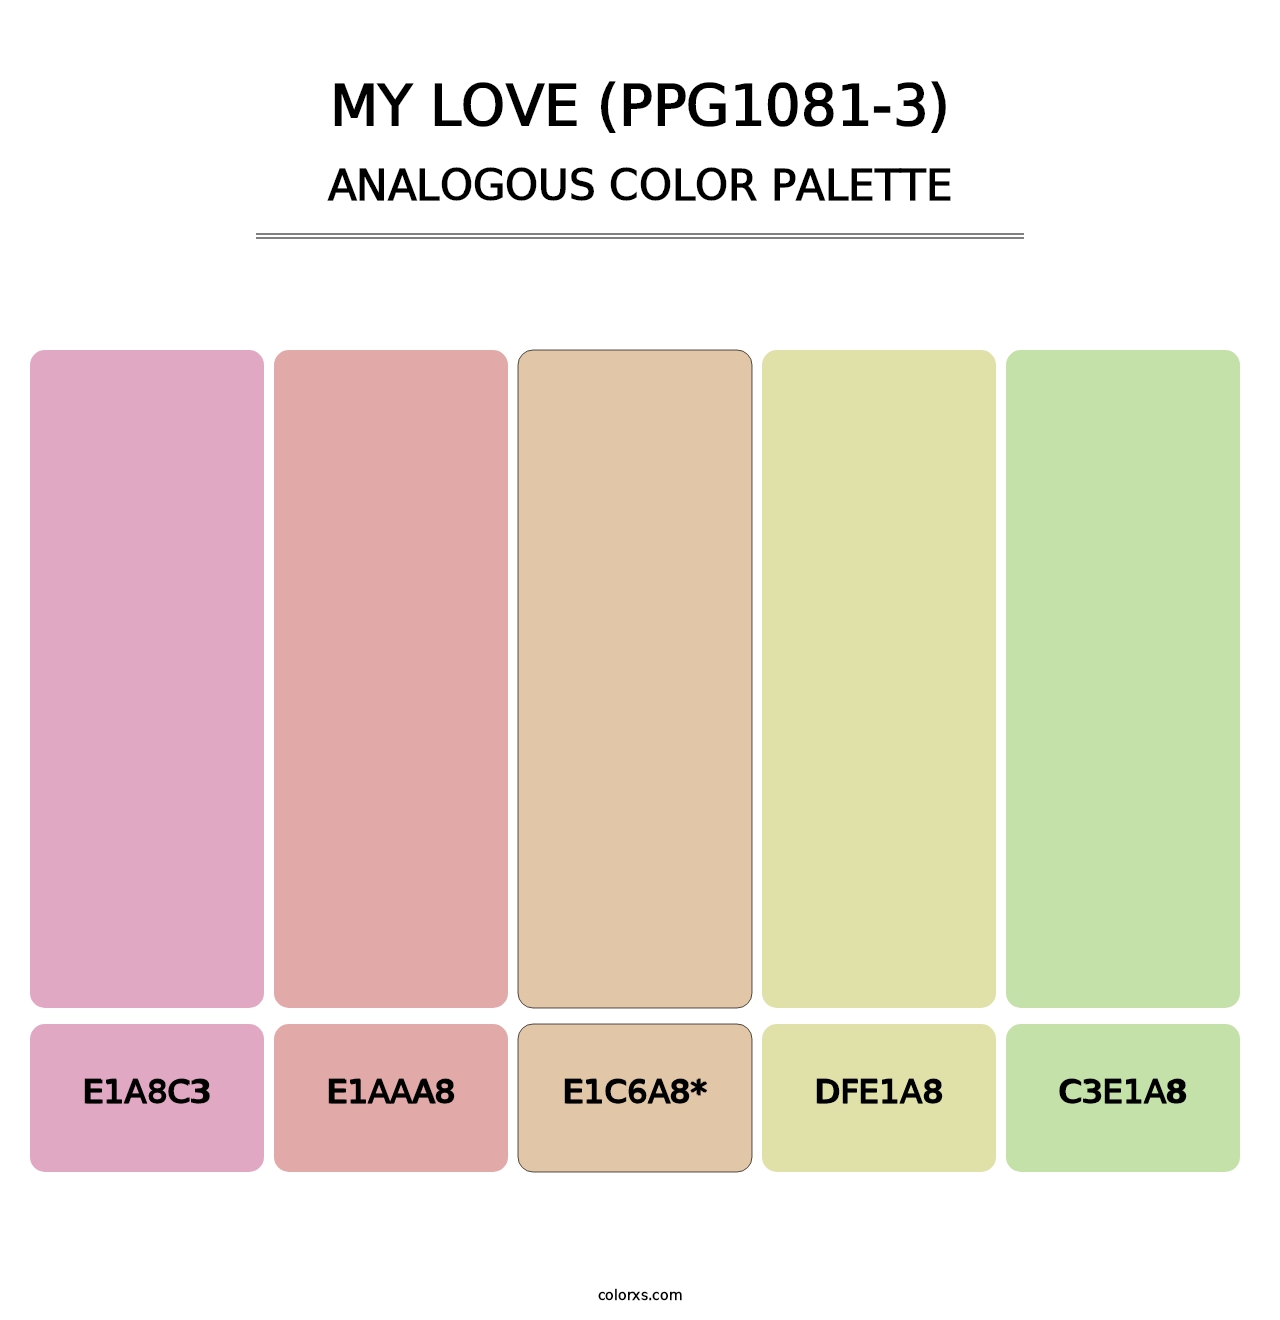 My Love (PPG1081-3) - Analogous Color Palette